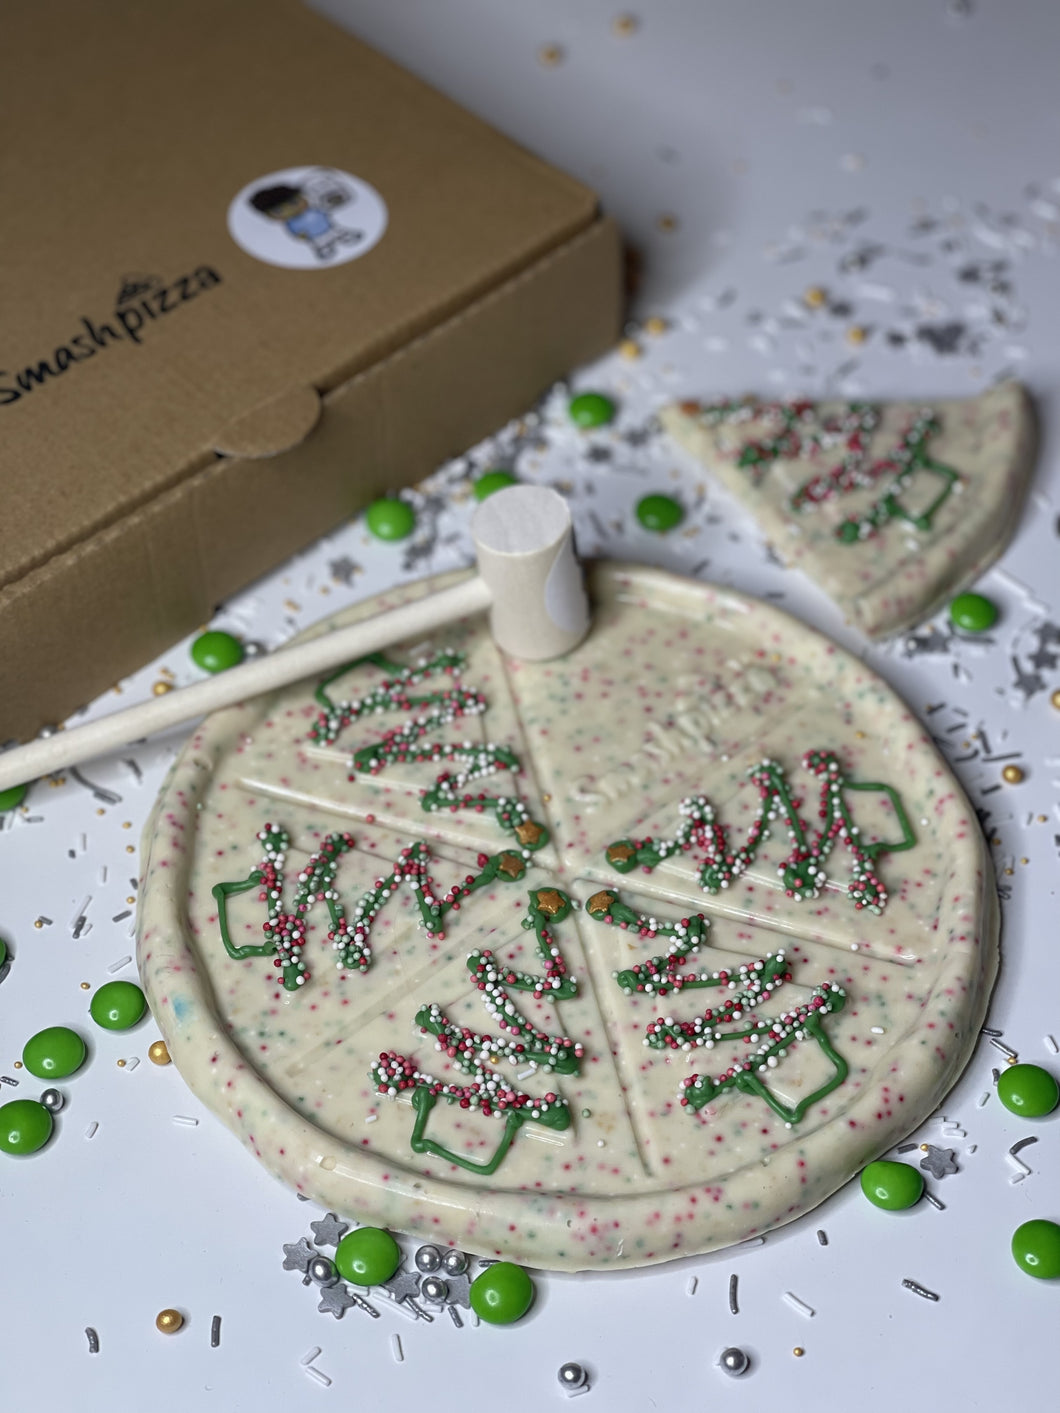 Christmas Smashpizza (Freckled Tree)